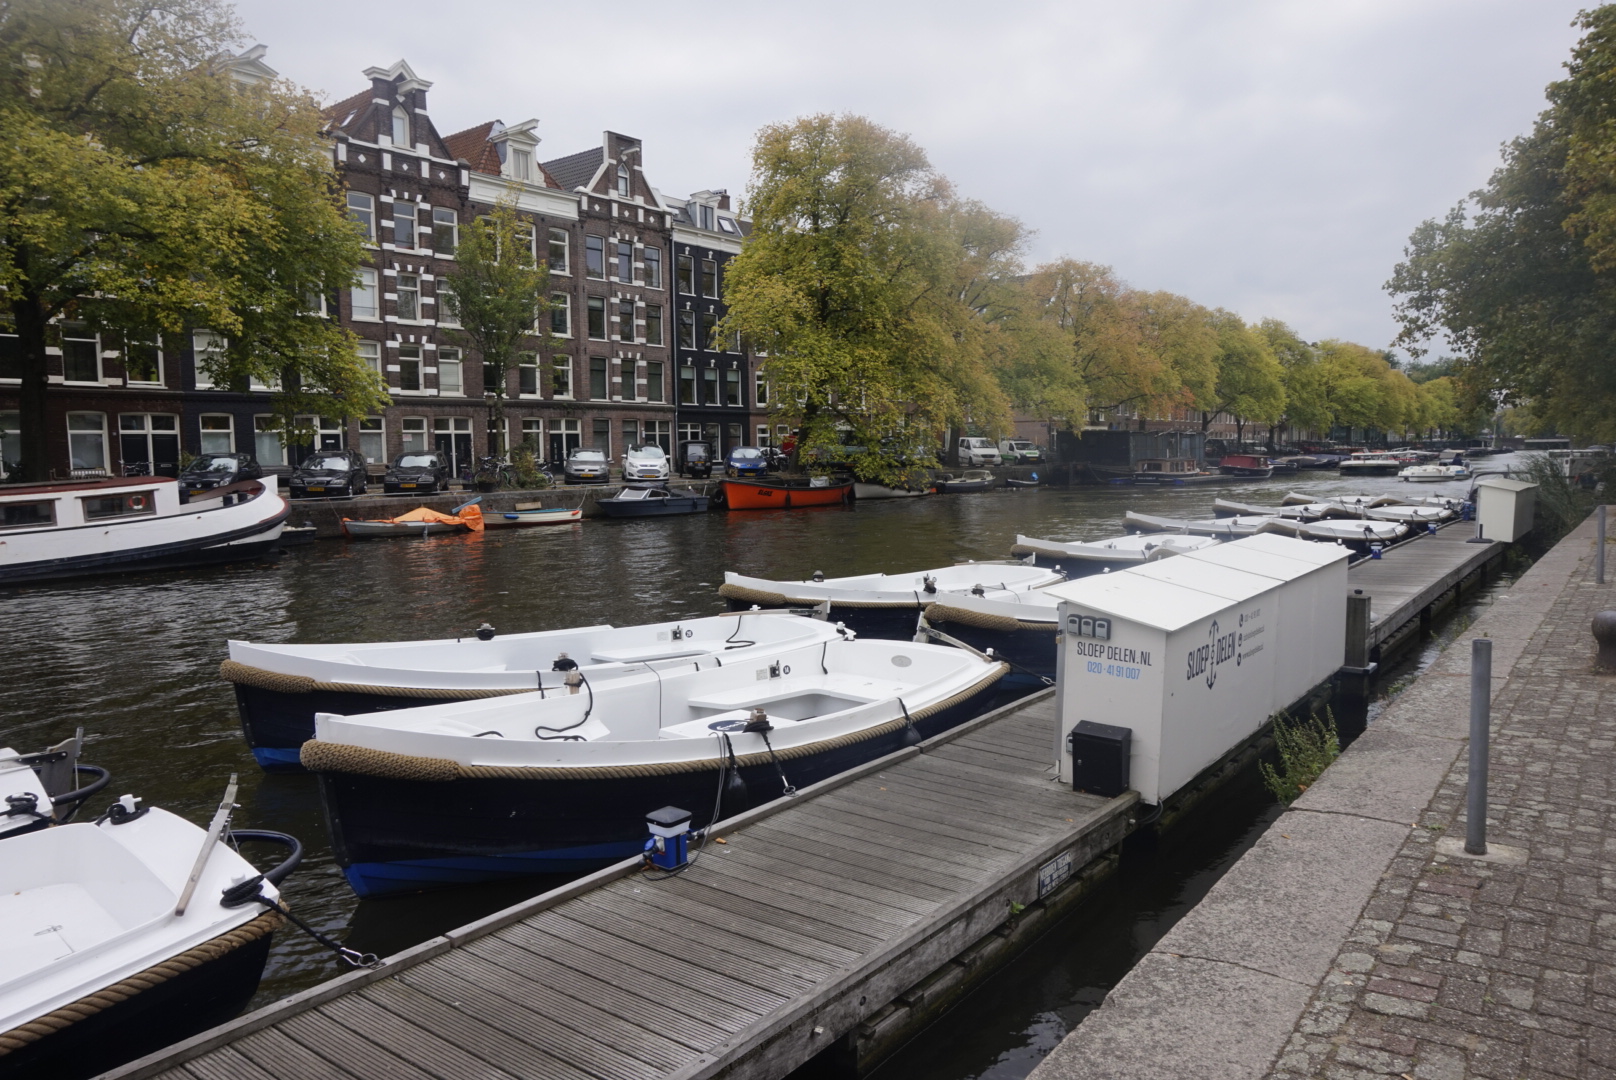 Sloepdelen's Amsterdam canal cruise